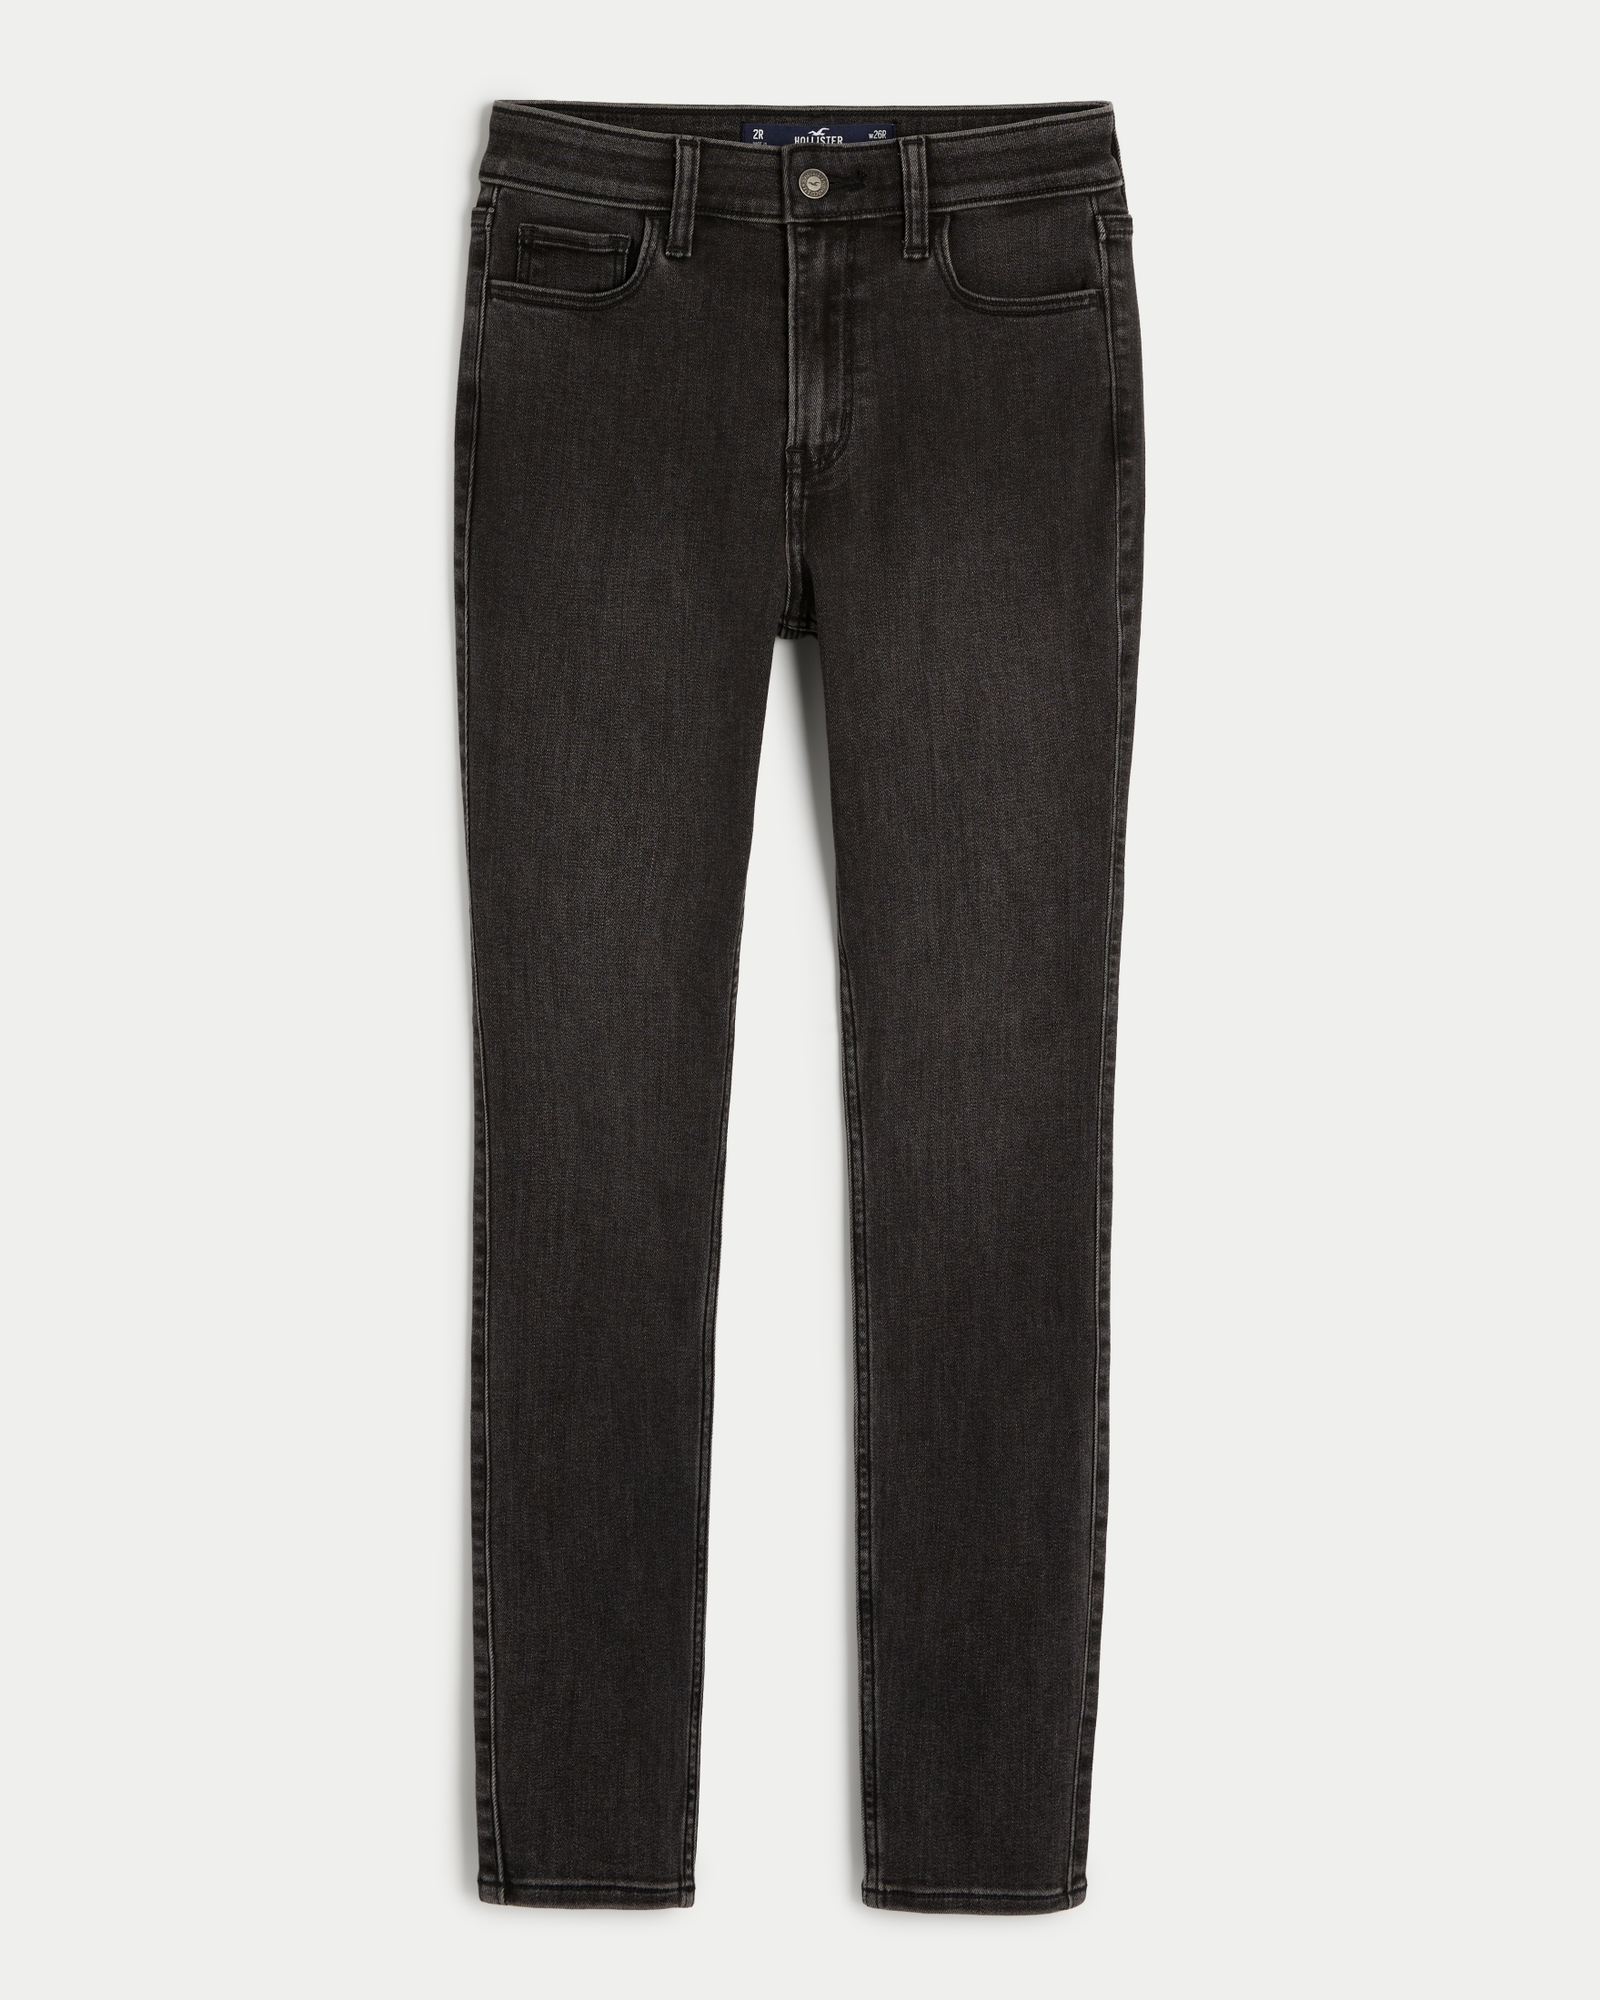 Hollister ultra high rise super skinny jeans in washed black